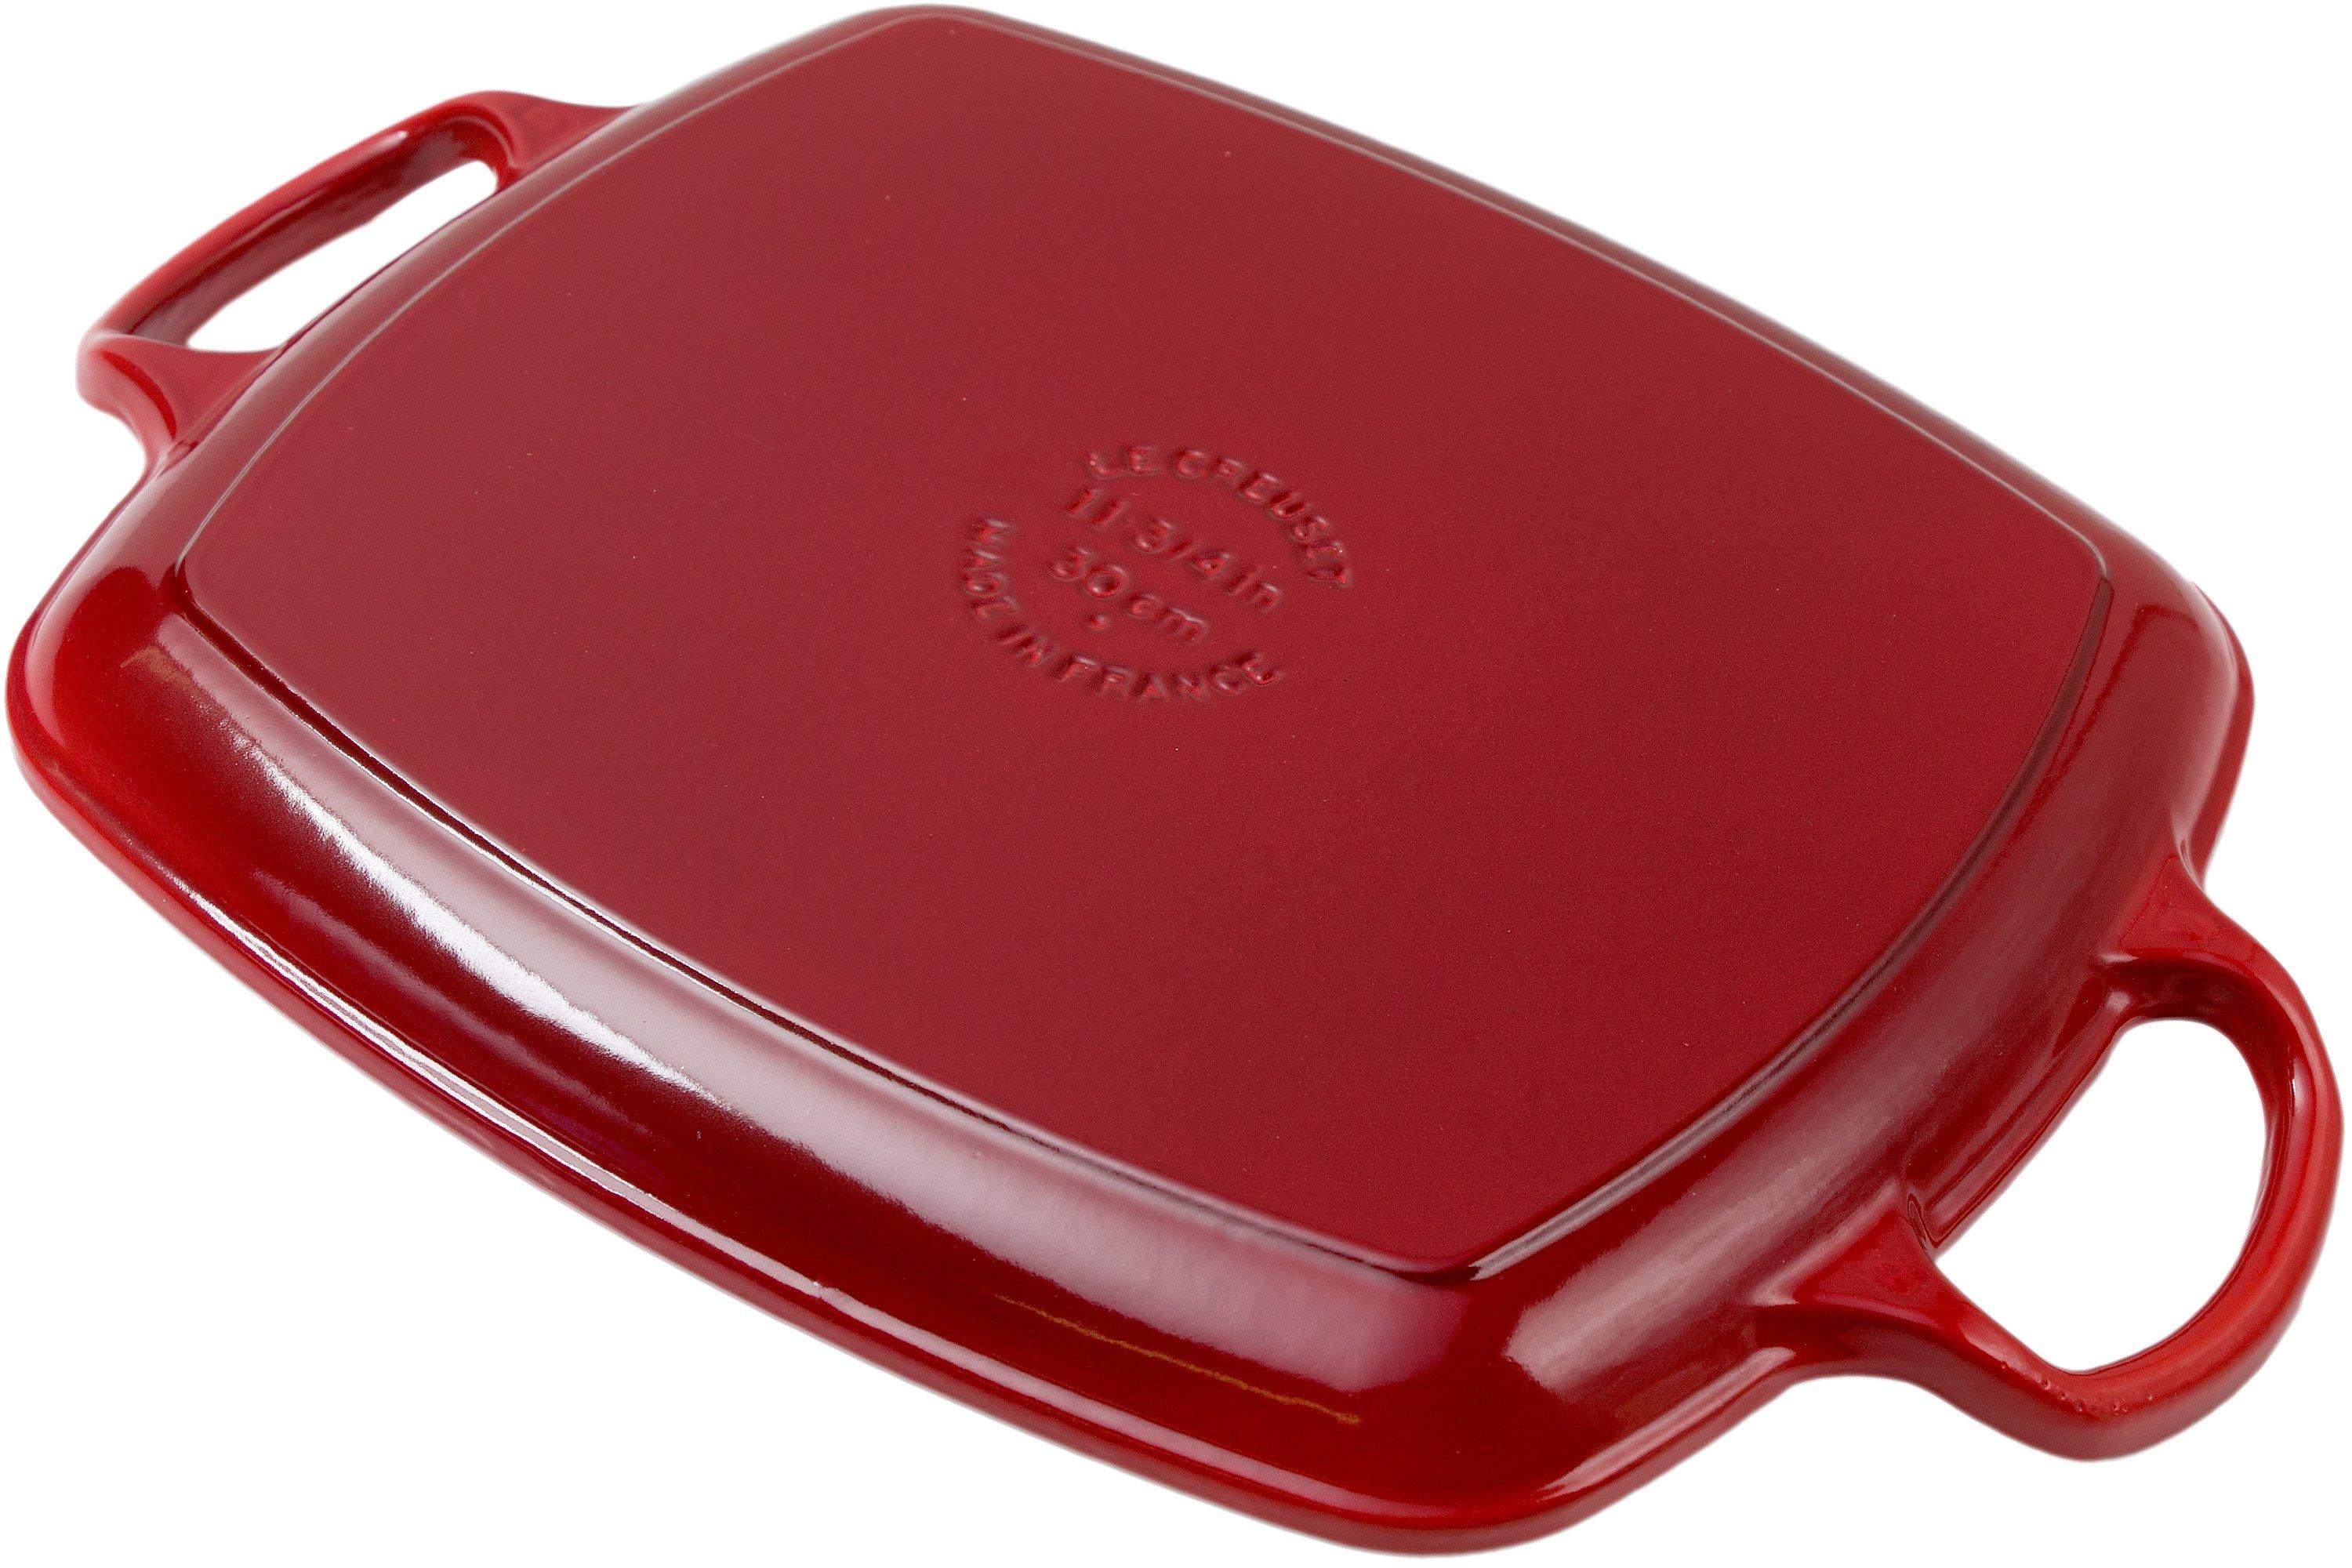 Le Creuset La Fonte enamel rectangular grill pan 32 cm, red